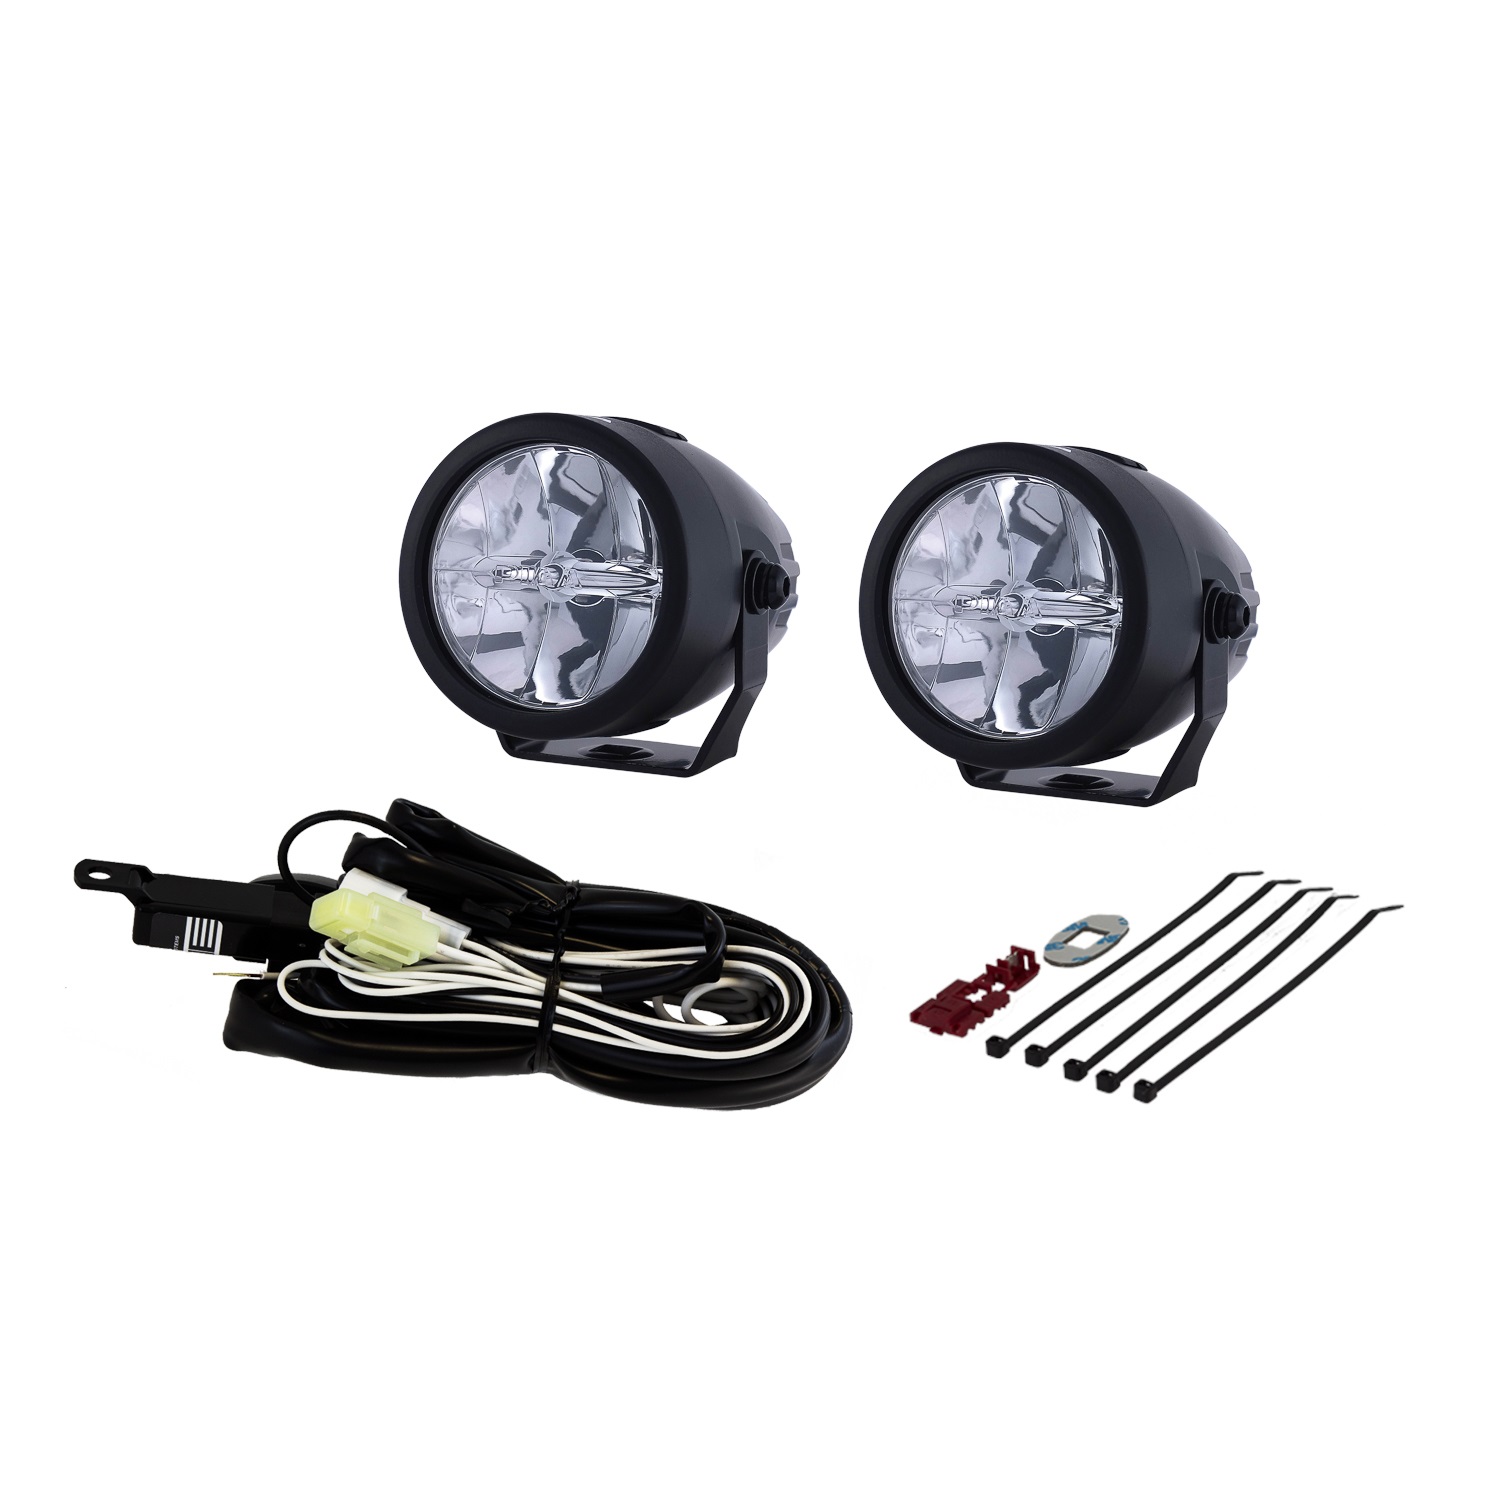 PIAA 02772 LED Driving Lamp Kit